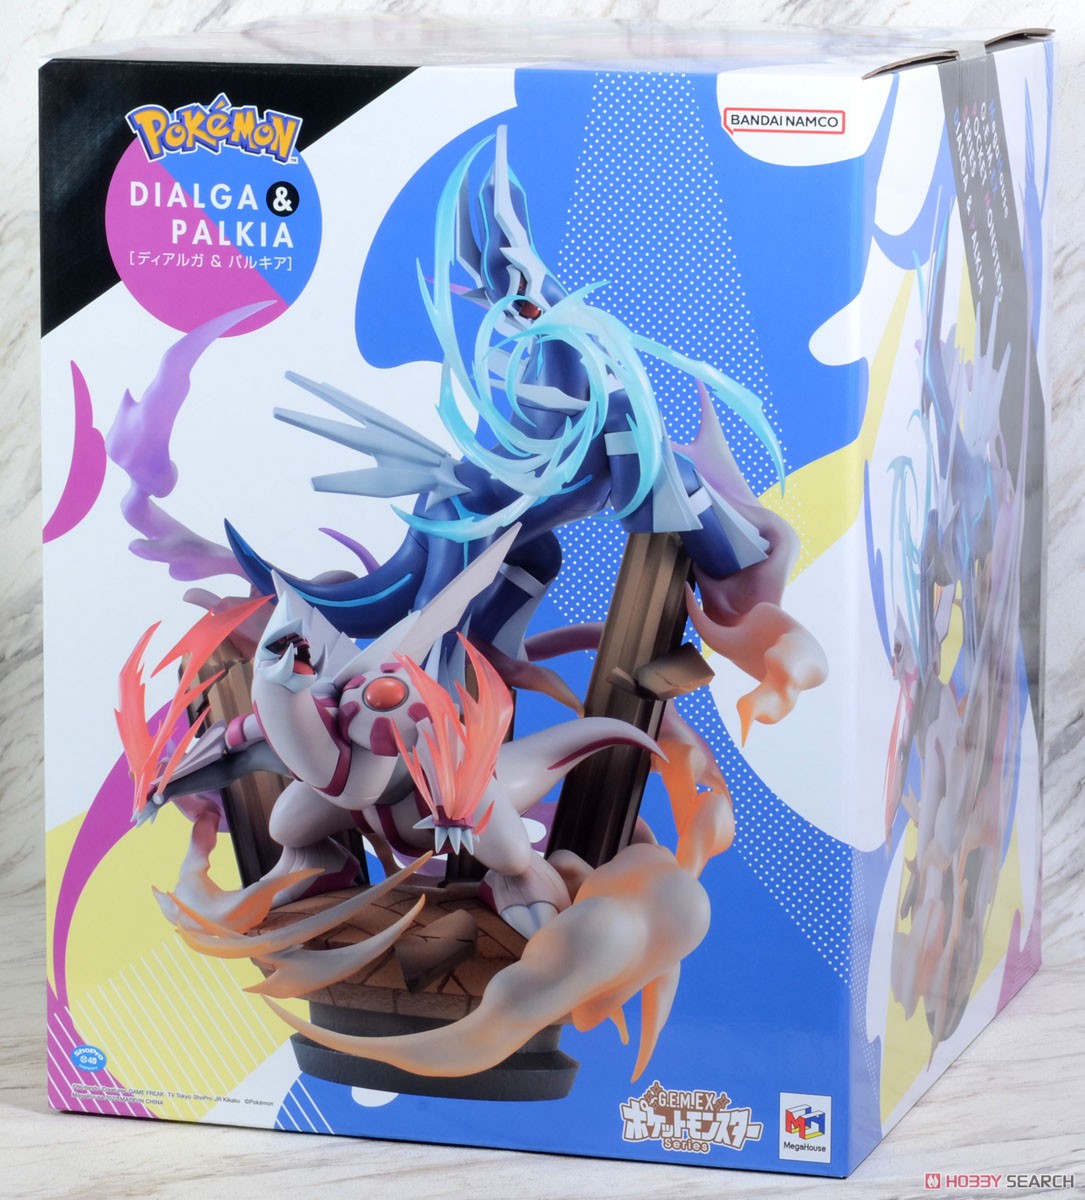 G.E.M.EX Series Pokemon Dialga & Palkia (PVC Figure) Package1